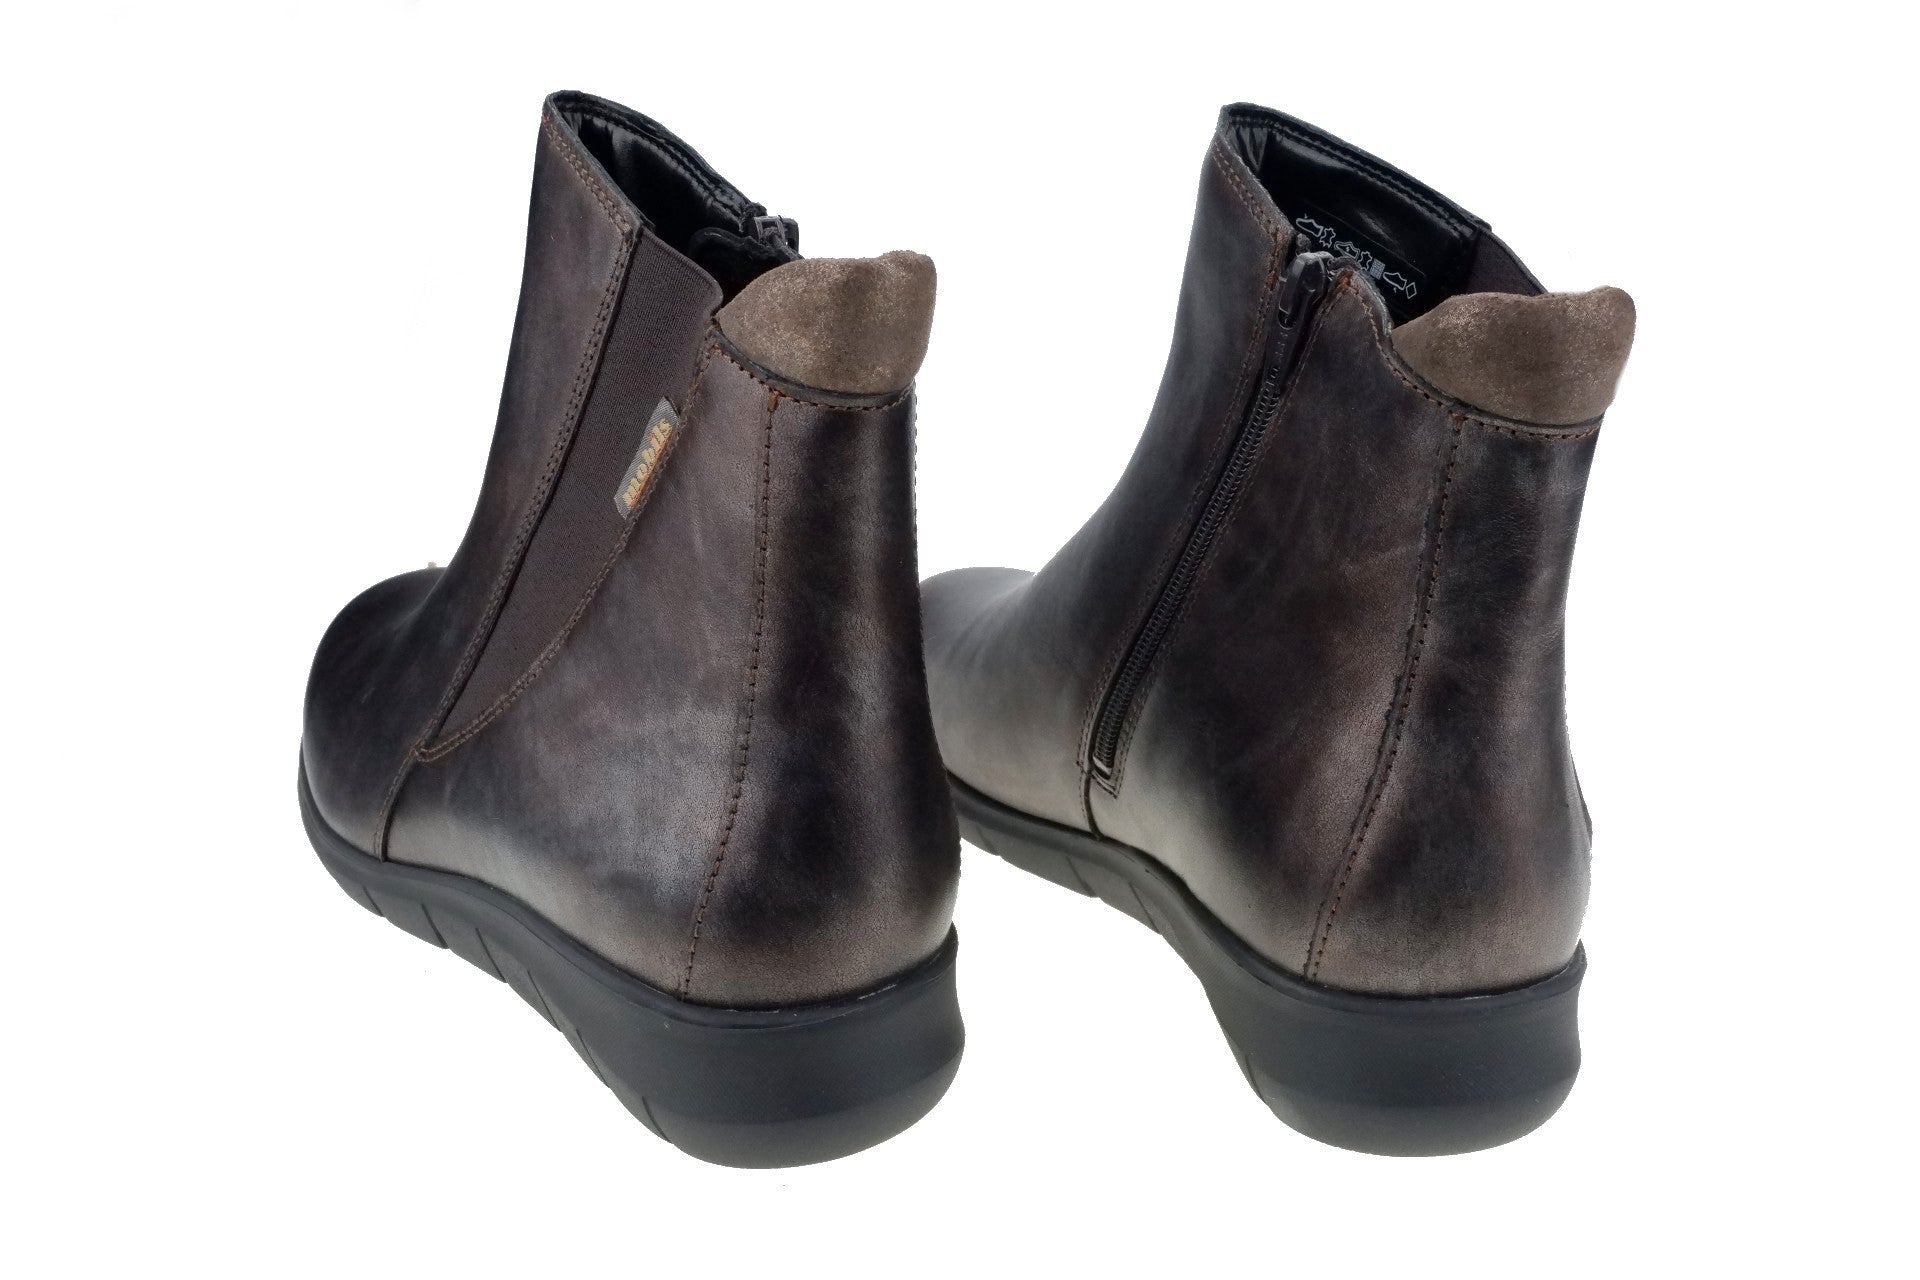 'Idilia' women's ergonomic wide fit boot - Mobils by Mephisto - Chaplinshoes'Idilia' women's ergonomic wide fit boot - Mobils by MephistoMephisto